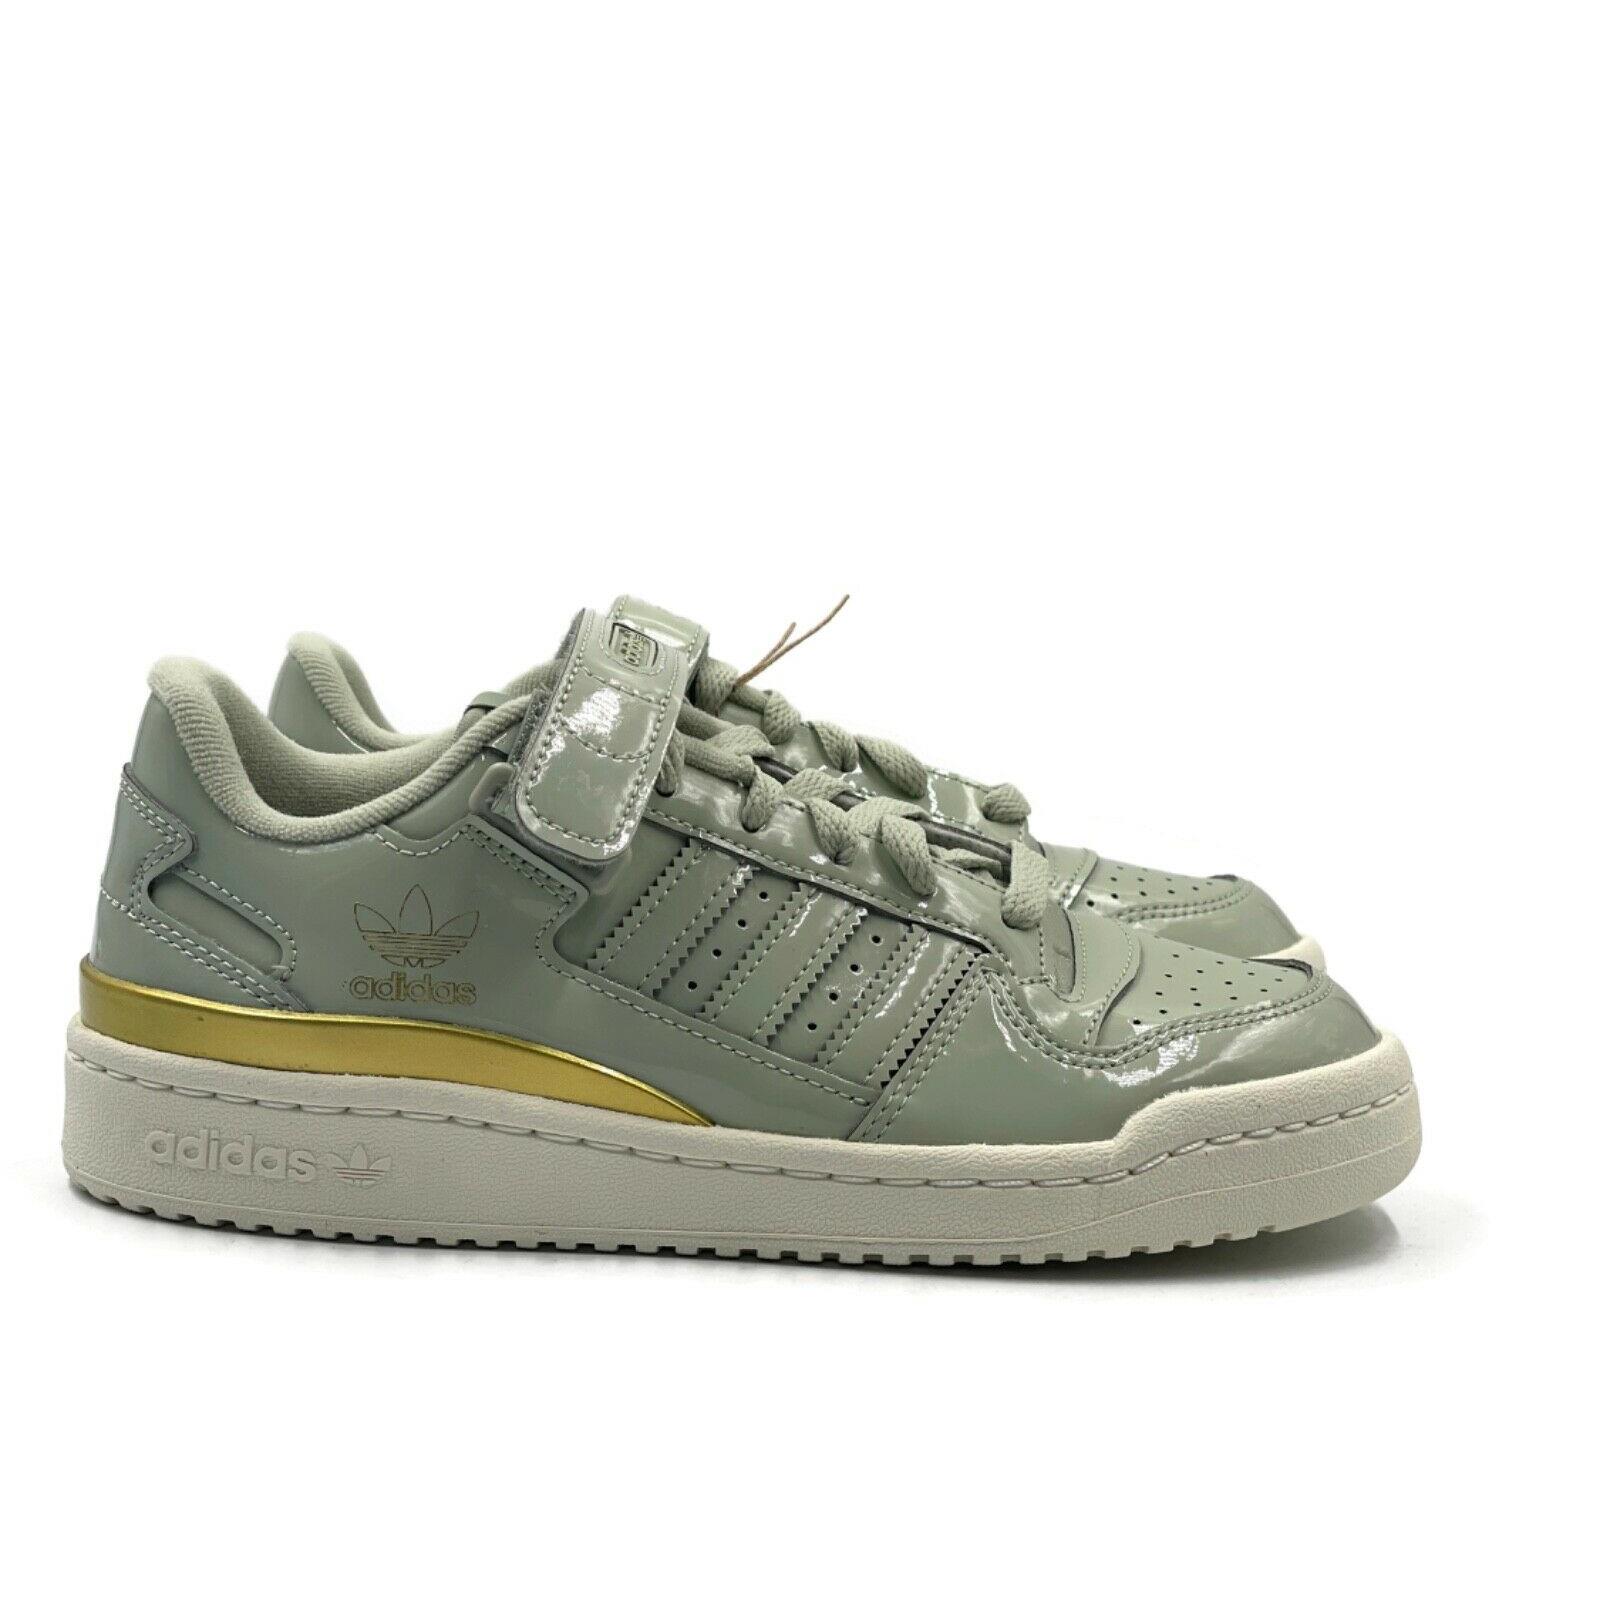 Adidas Forum Low Women Casual Retro Shoe Green Patent White Trainer Sneaker